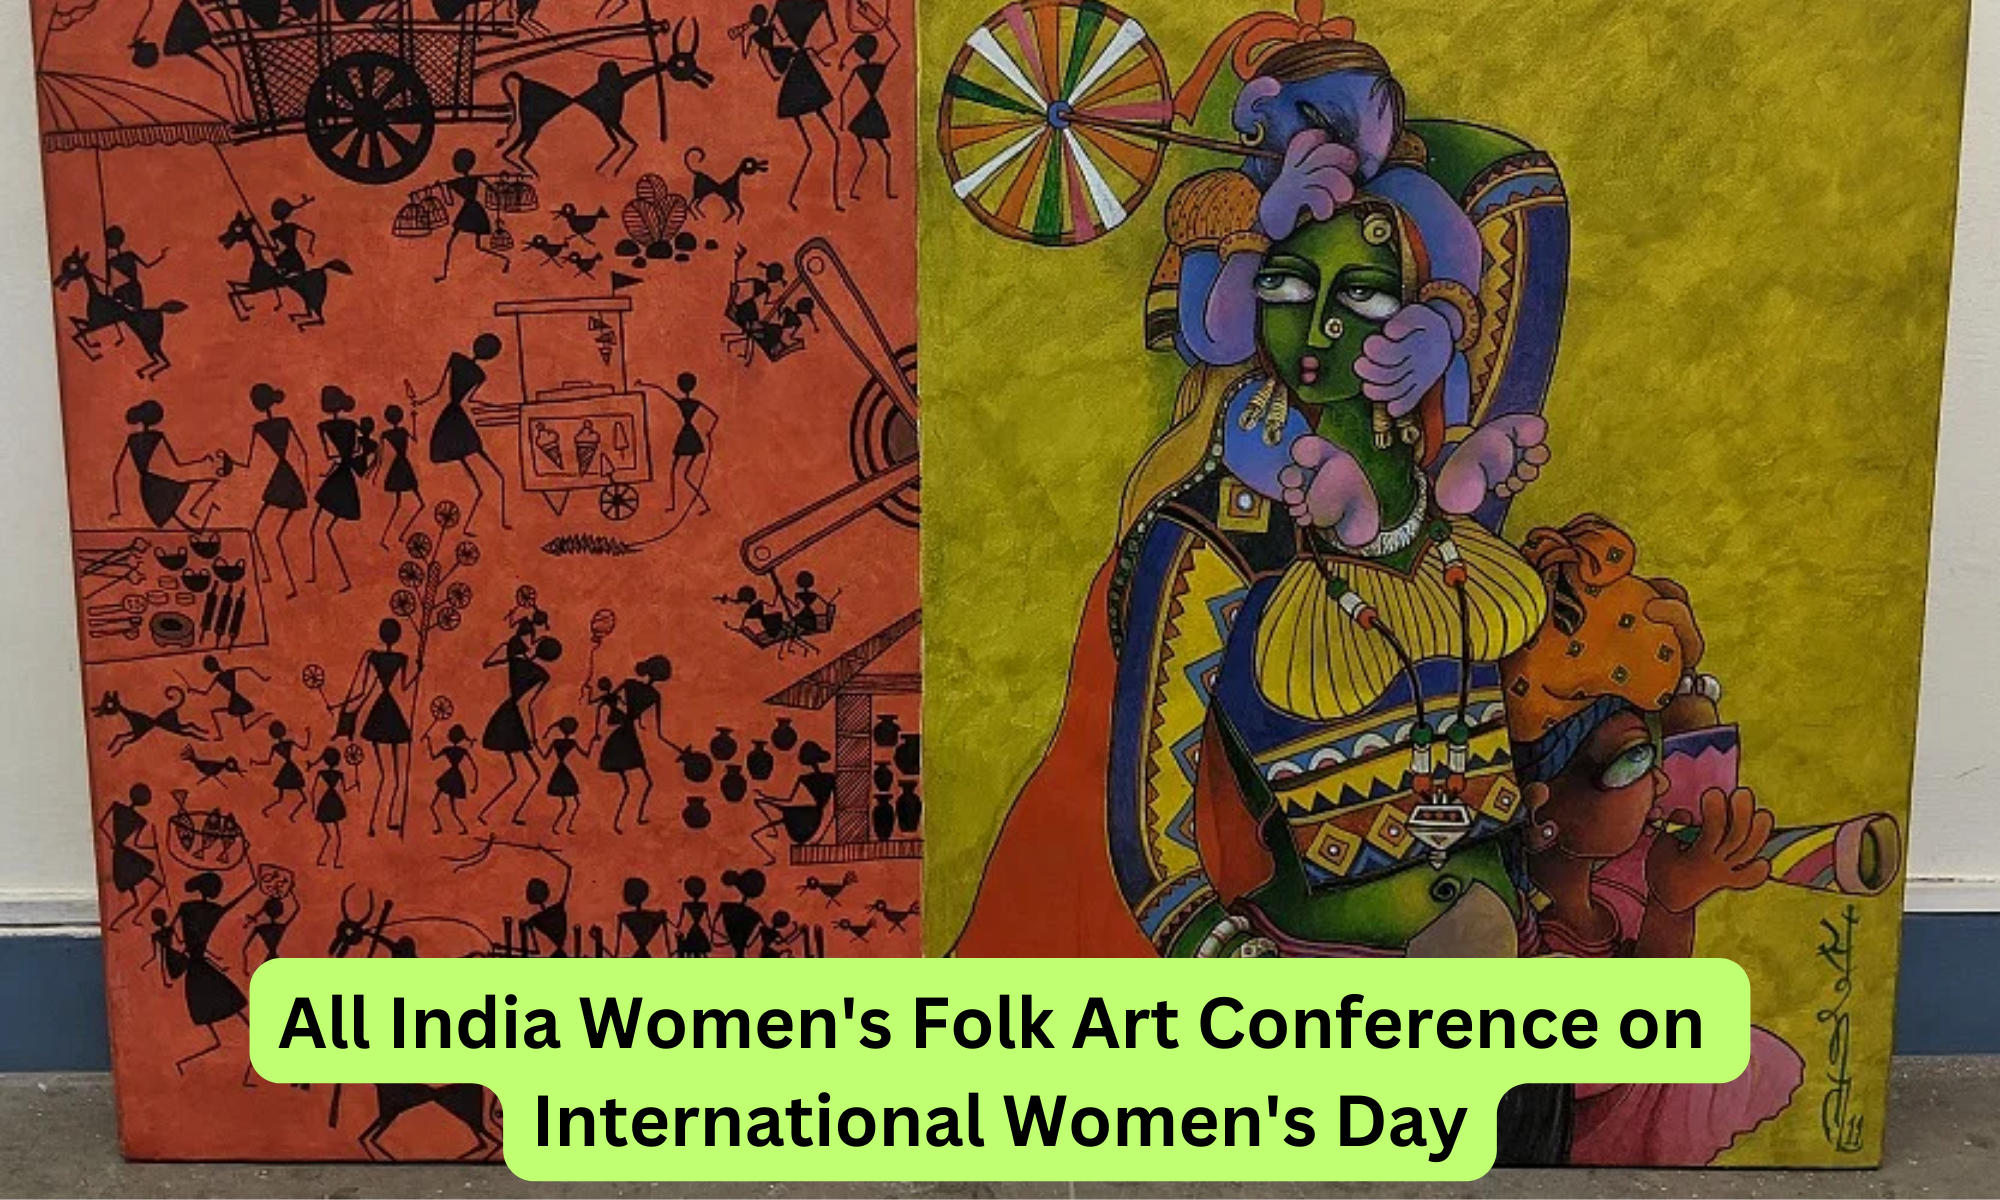 All India Women's Folk Art Conference on International Women's Day